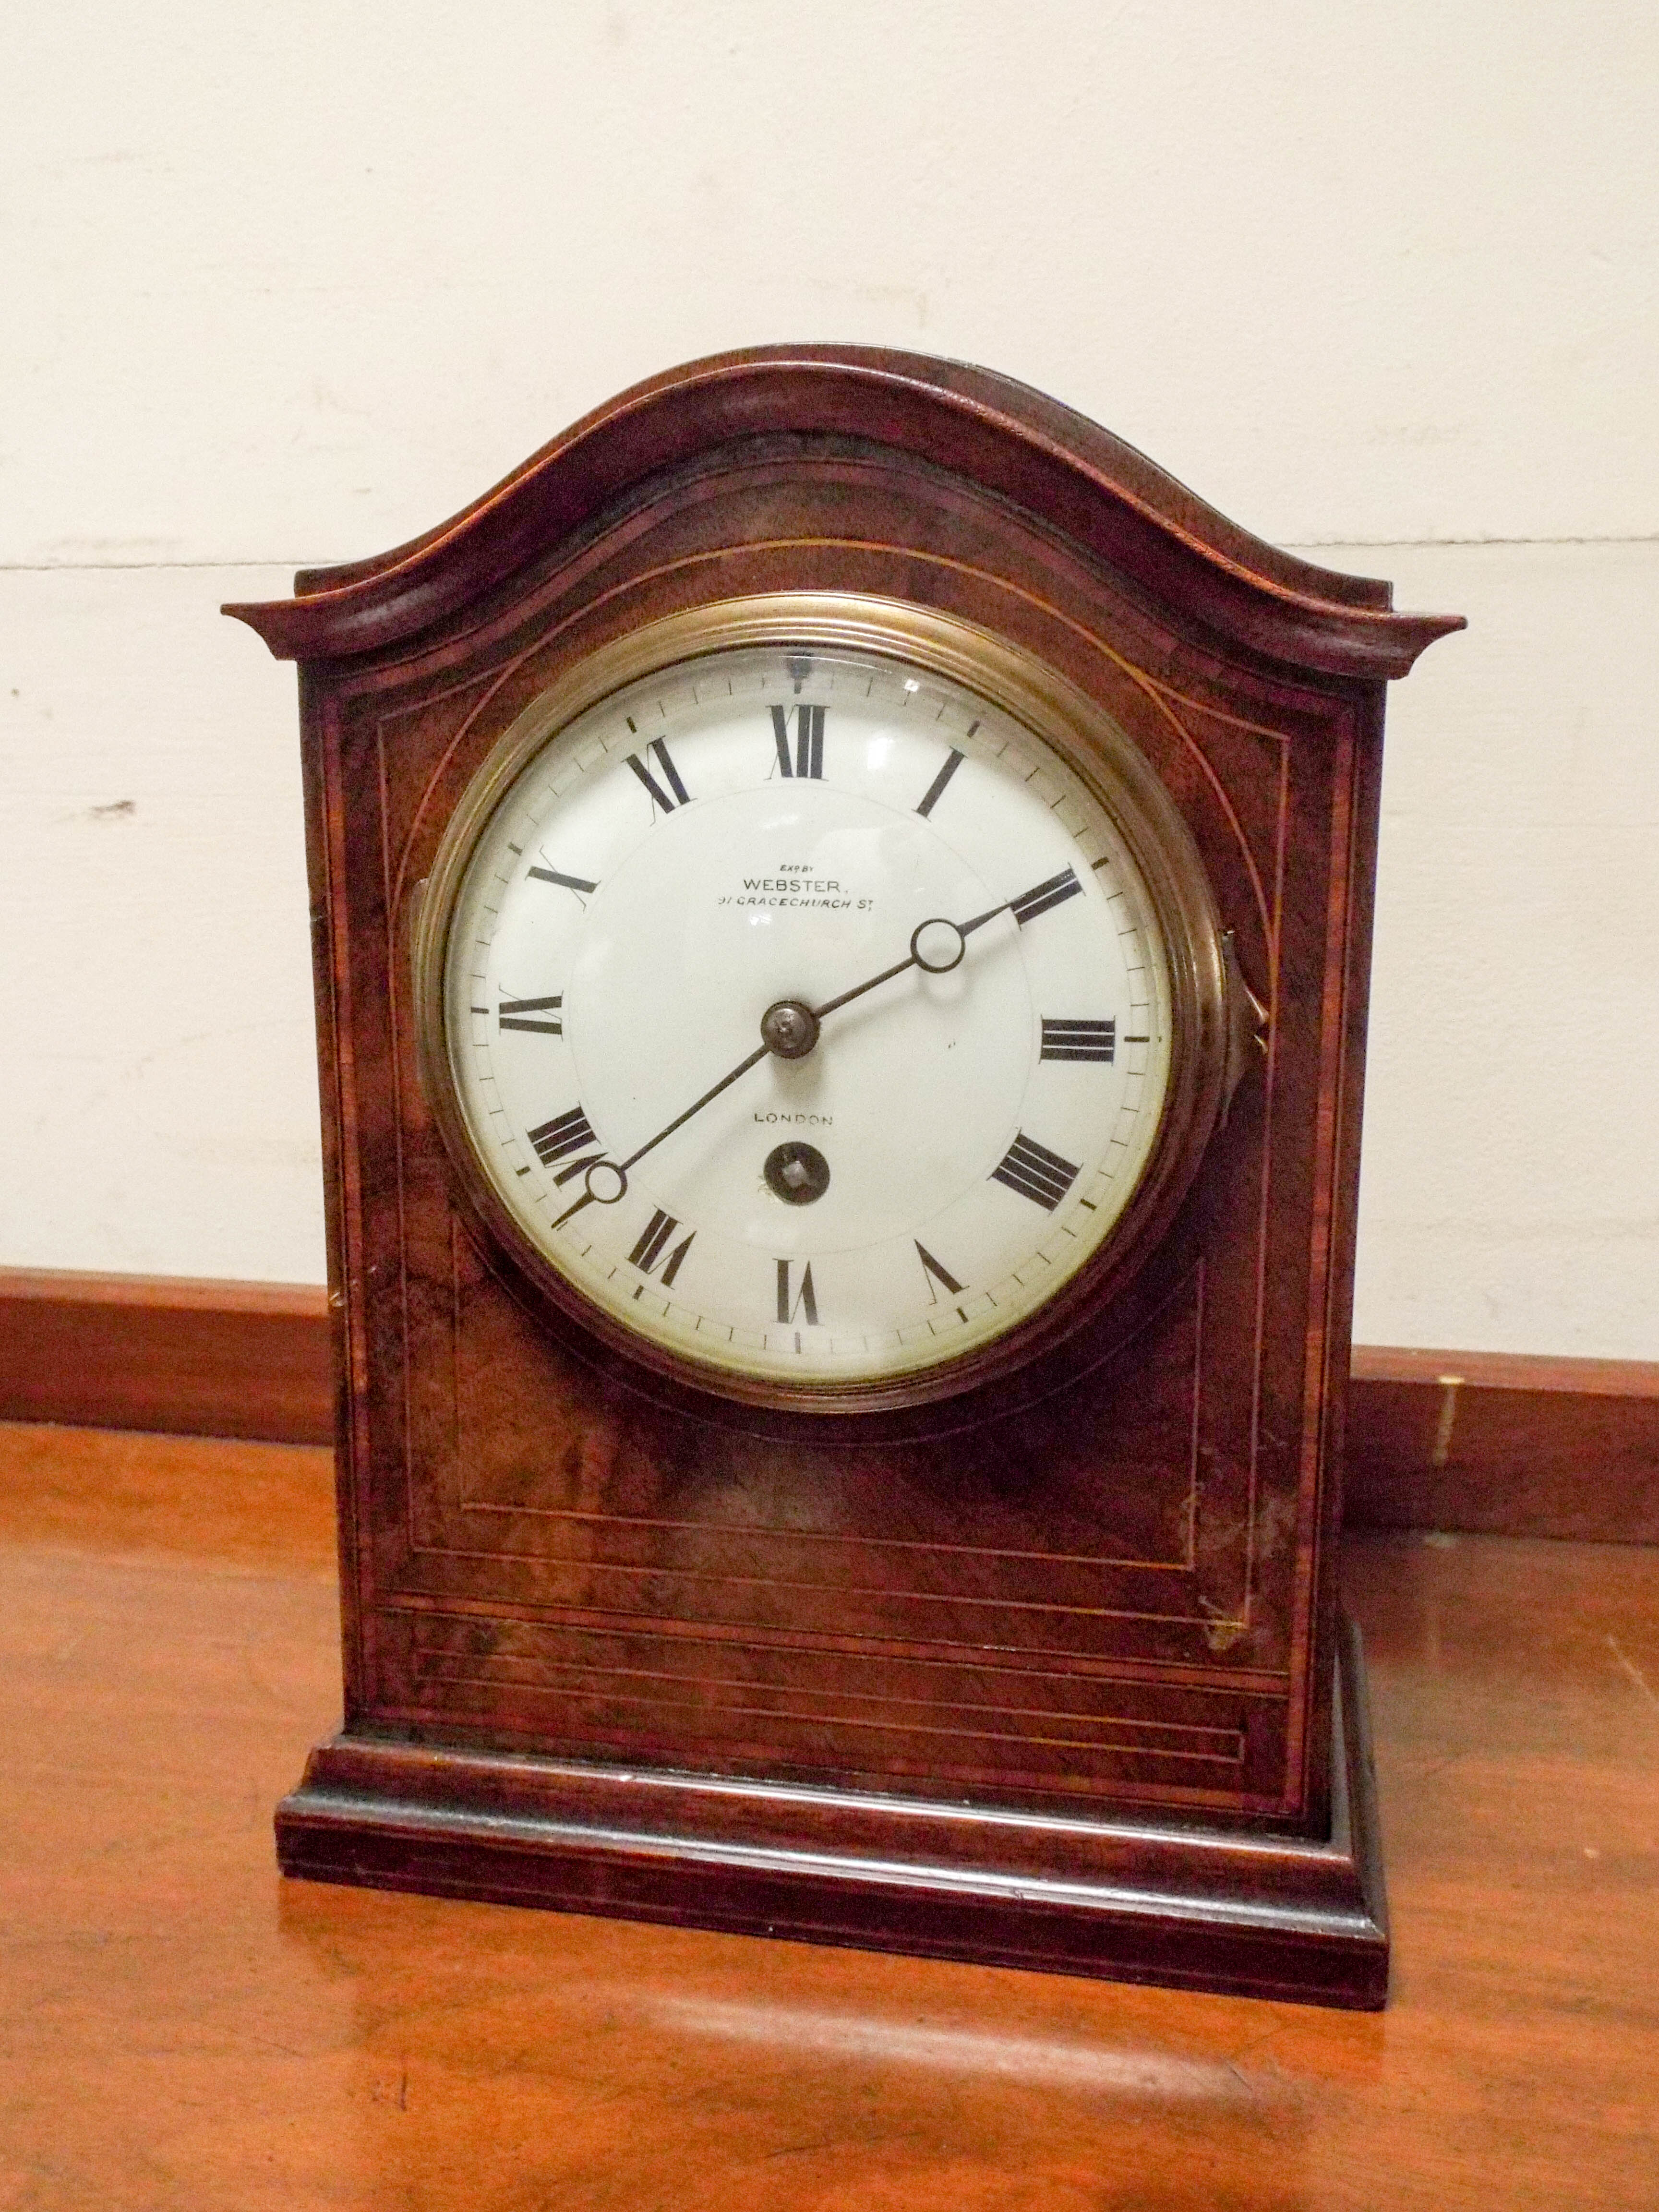 An Edwardian mantel clock in an inlaid mahogany case